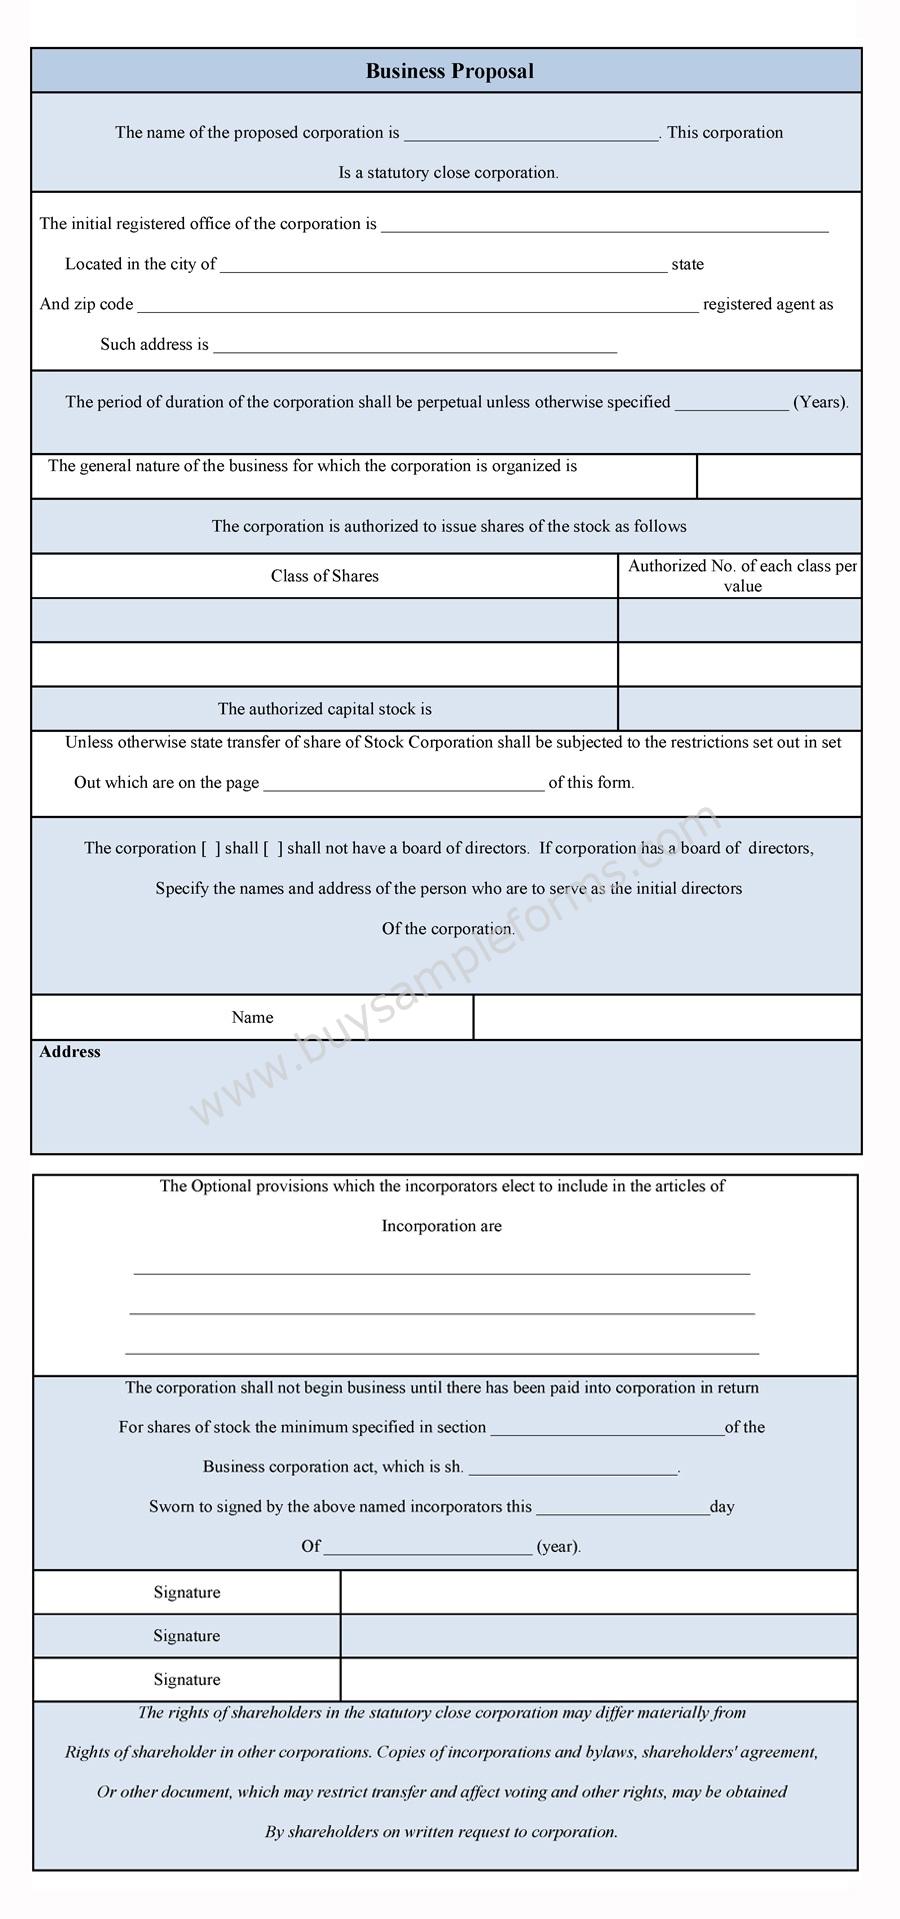 Business Proposal Form | Business Proposal Format | Buy Sample Forms Online